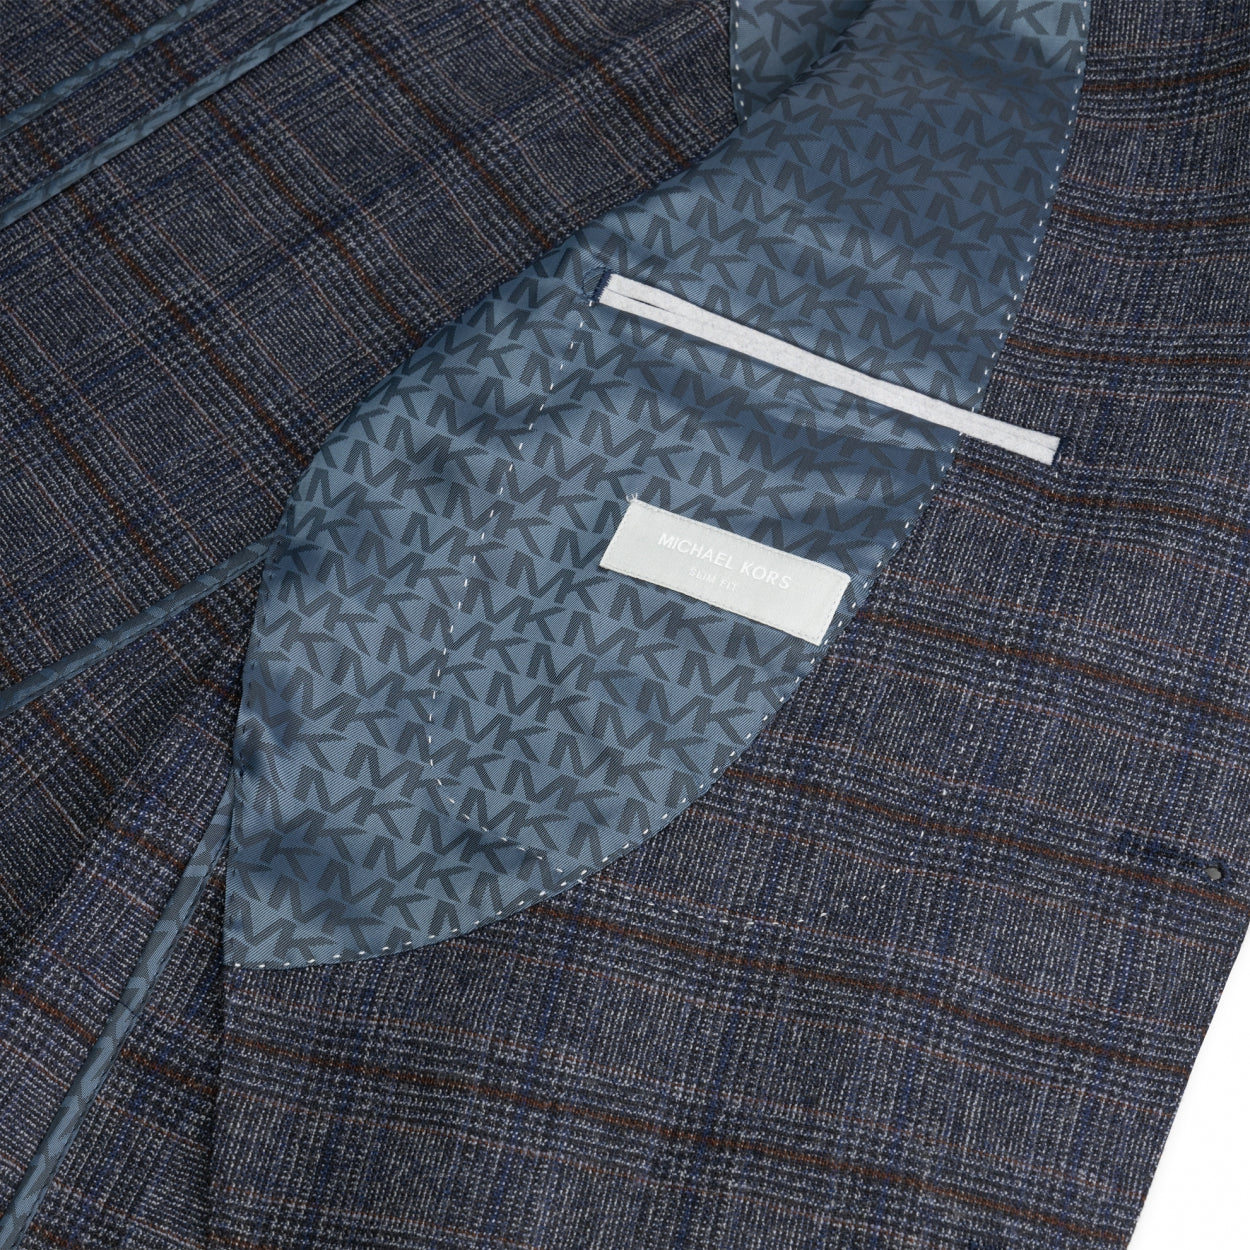 Blue checkered slim fit jacket Michael Kors - MK0BL01013/411